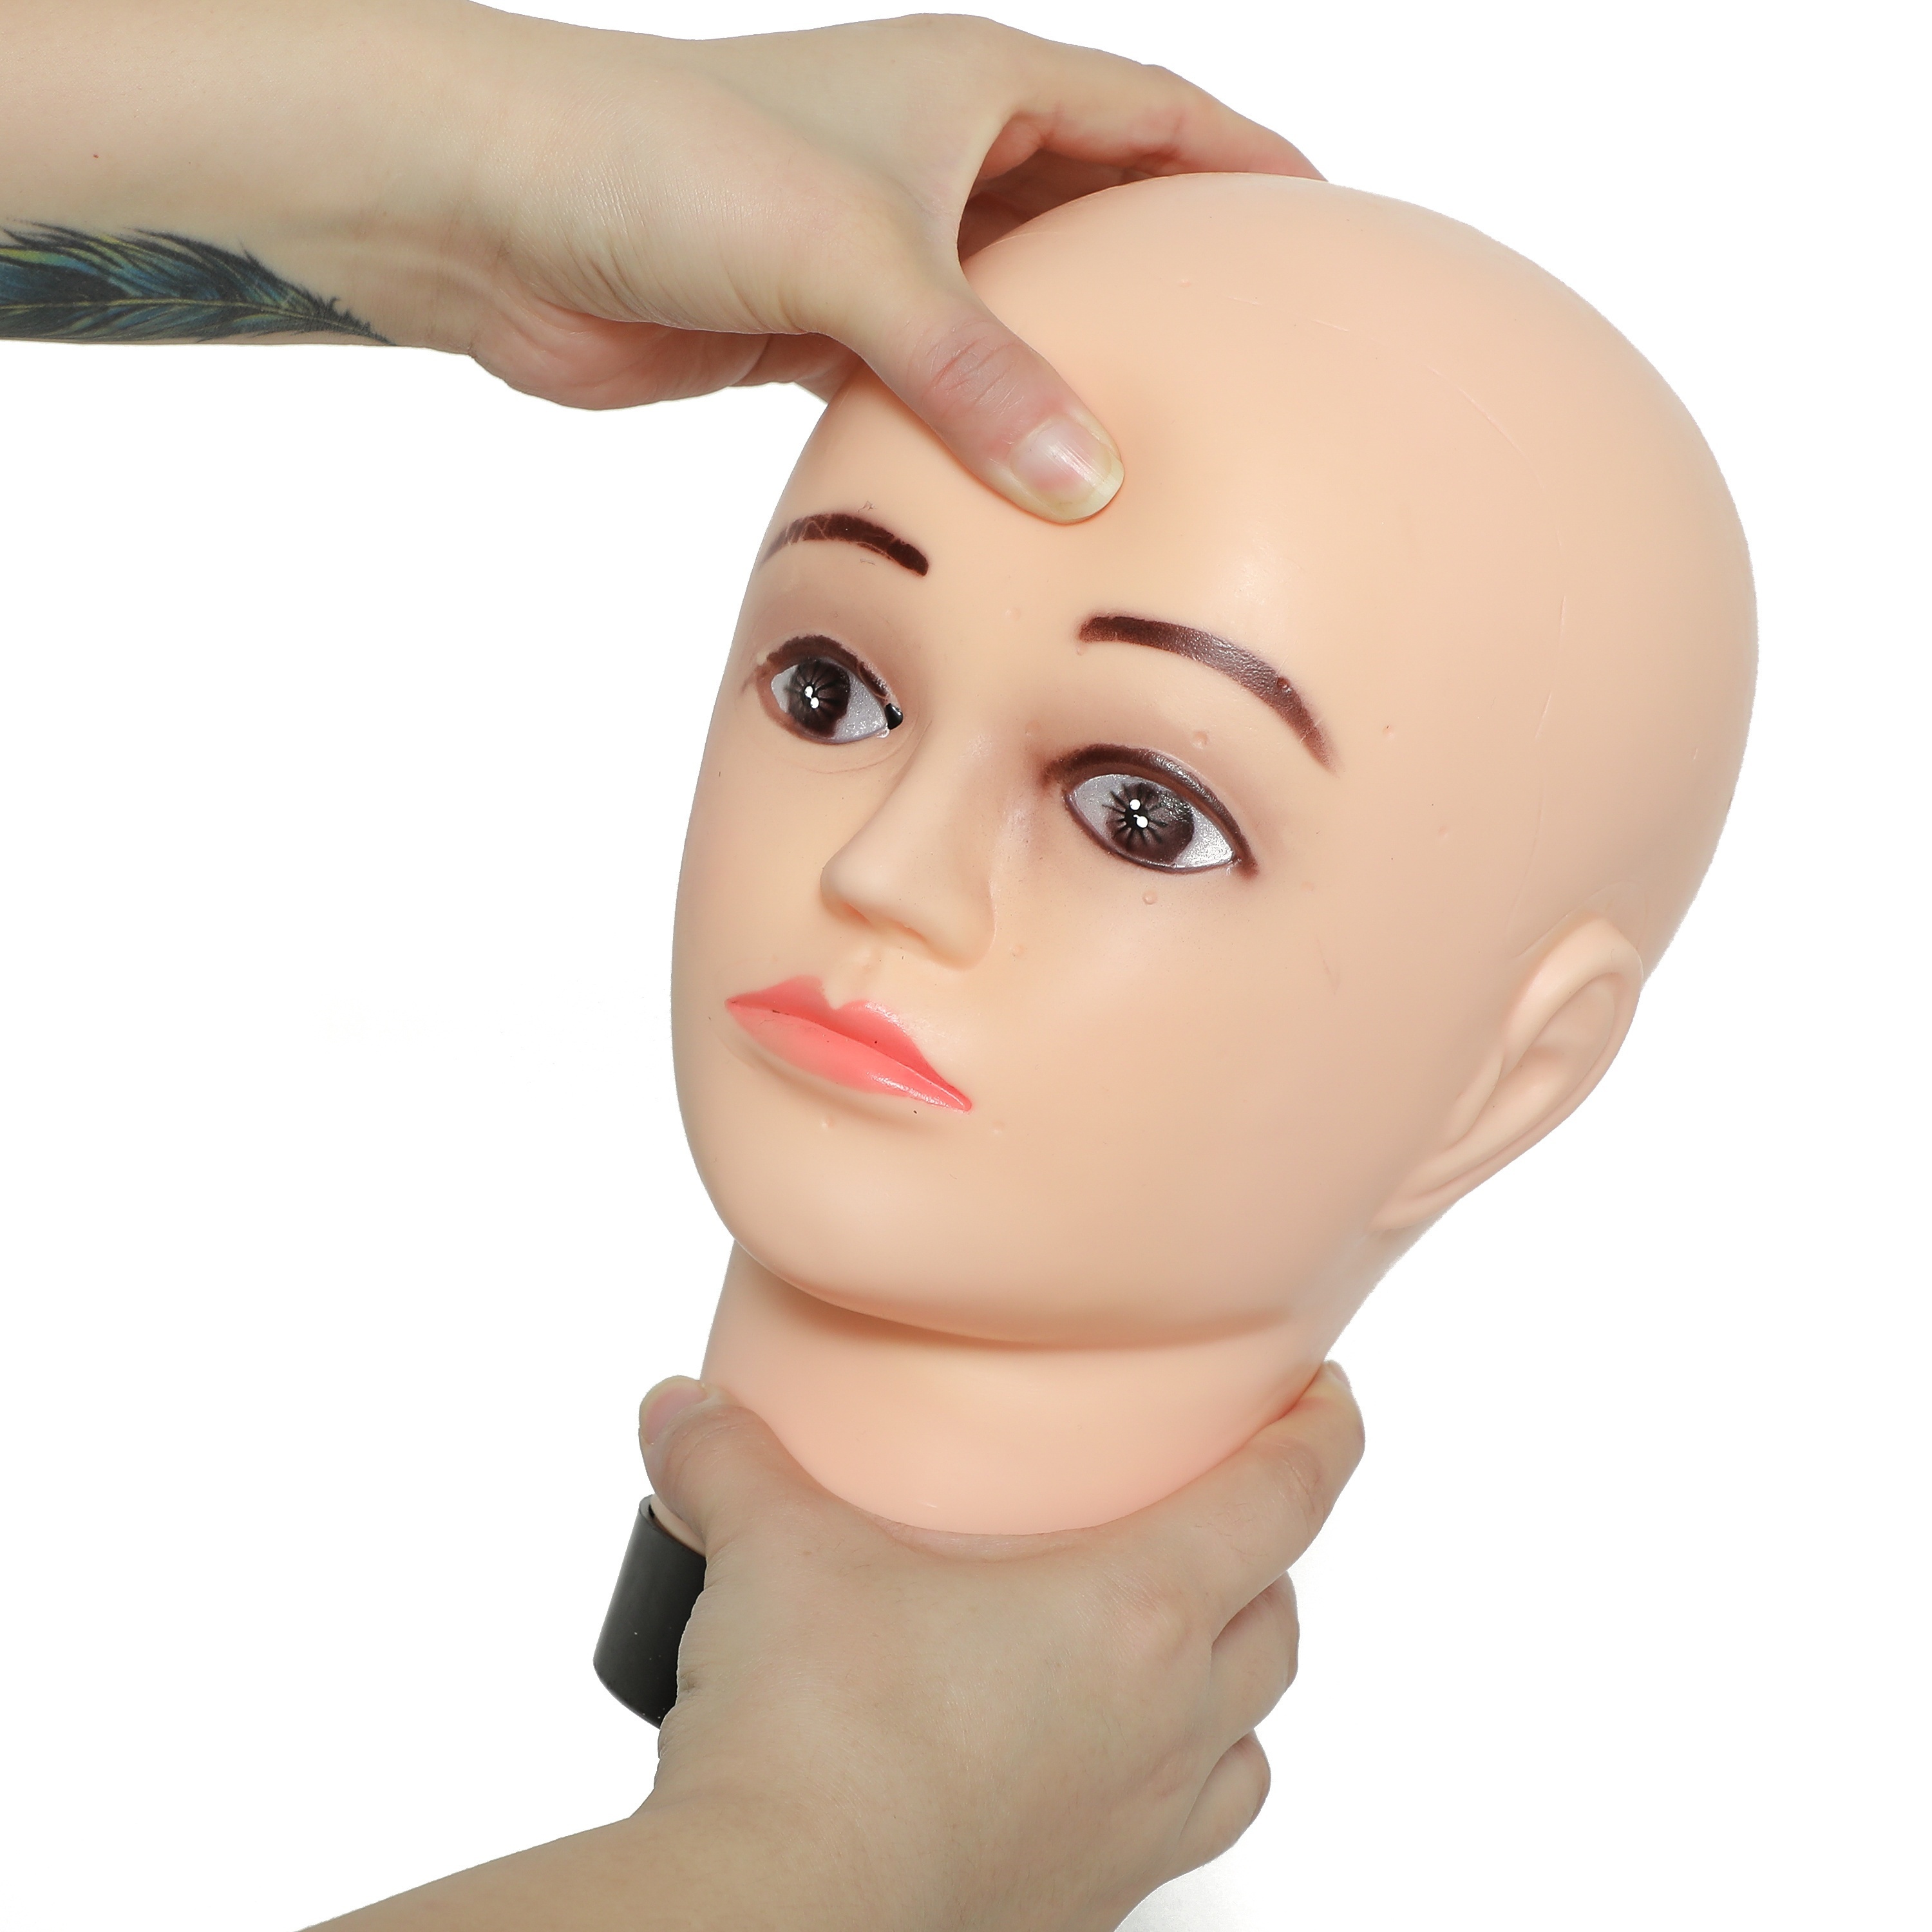 Female Bald Mannequin Doll Head for Wig Making, Hats, Eyeglasses